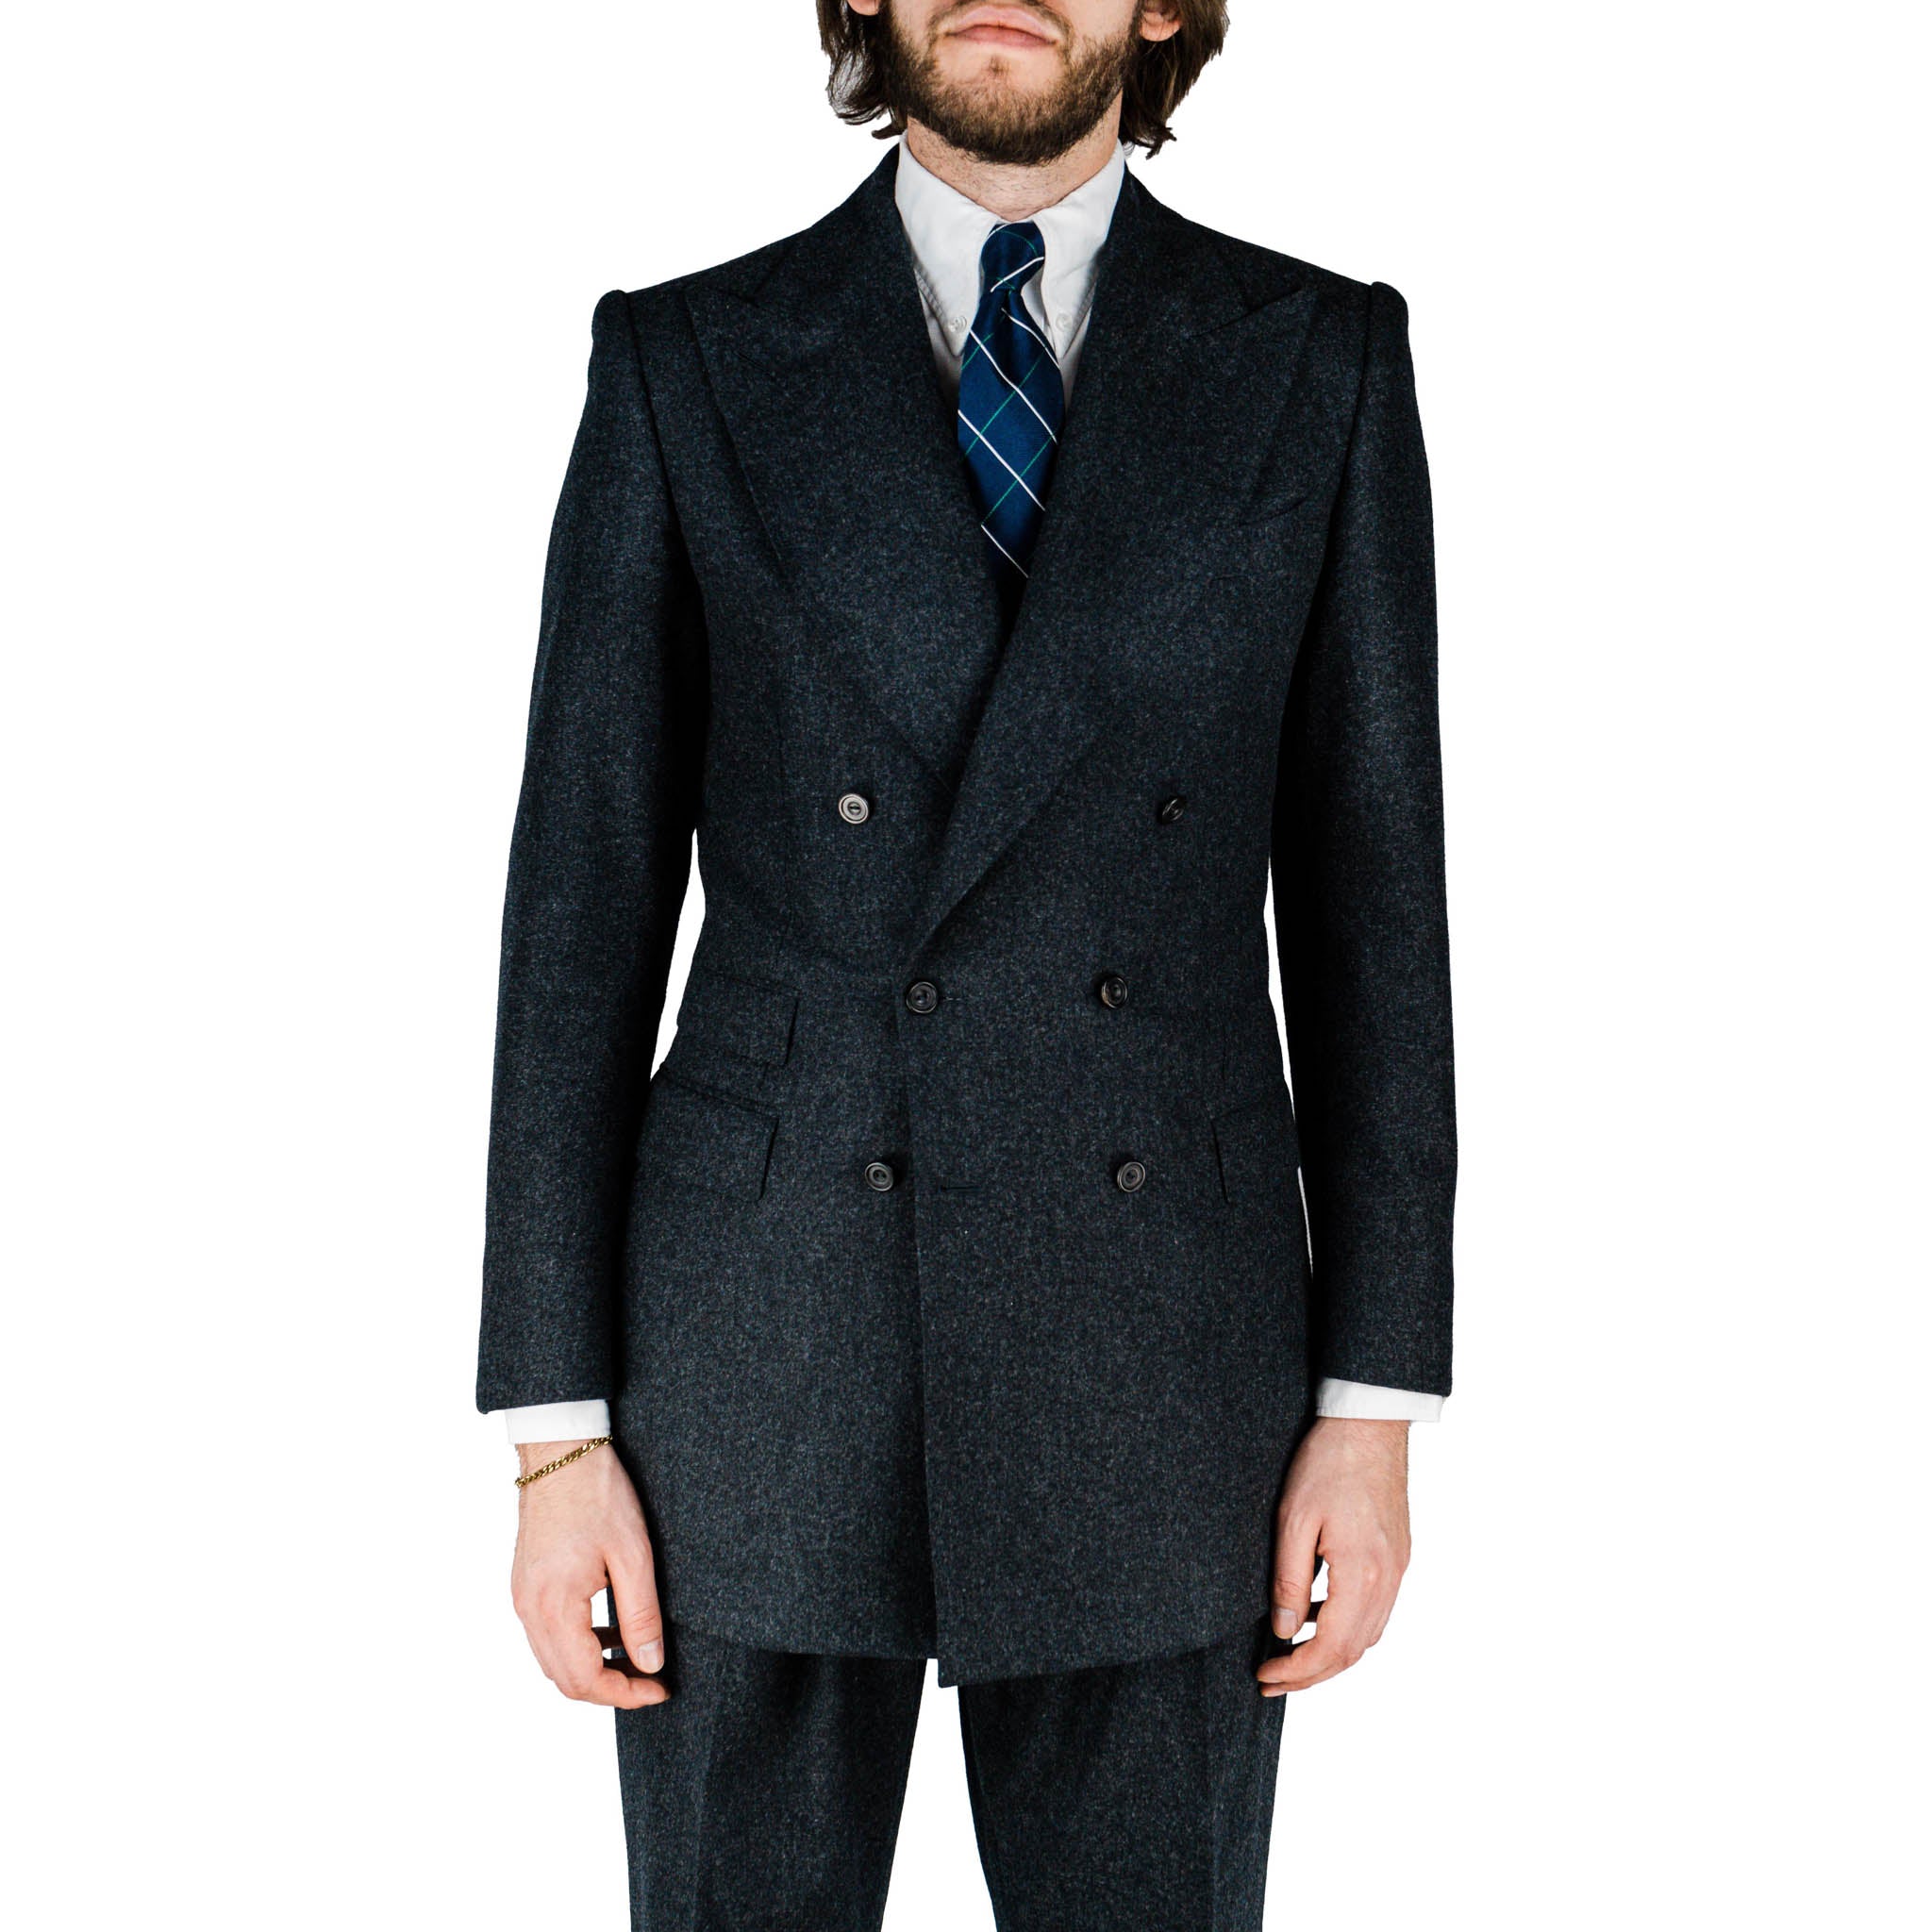 Suit - Charcoal flannel